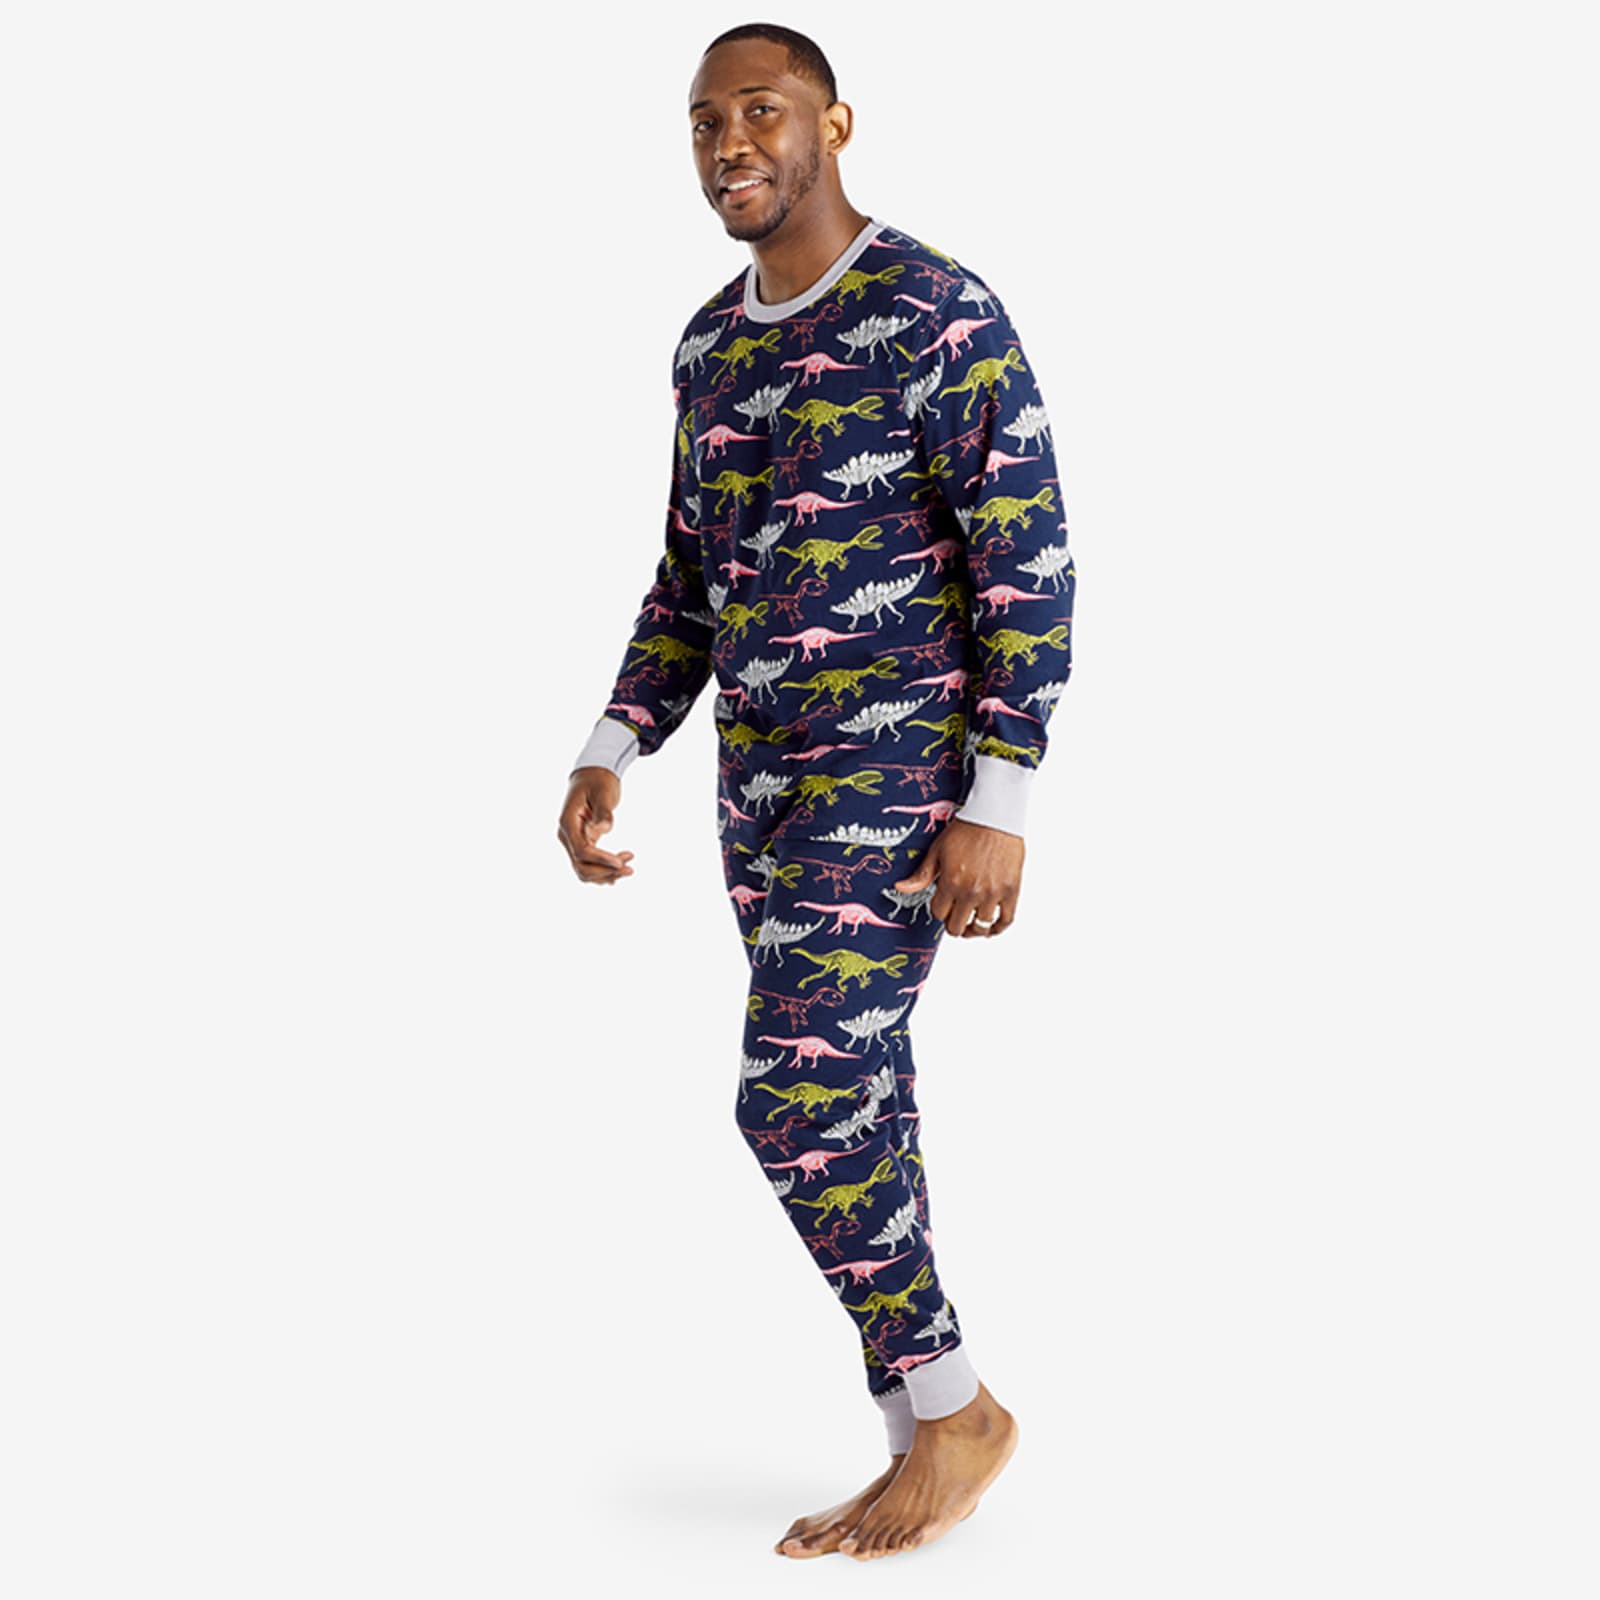 Inwoner ethiek schuld Organic Men's Snug-Fit Print Pajamas Set | The Company Store